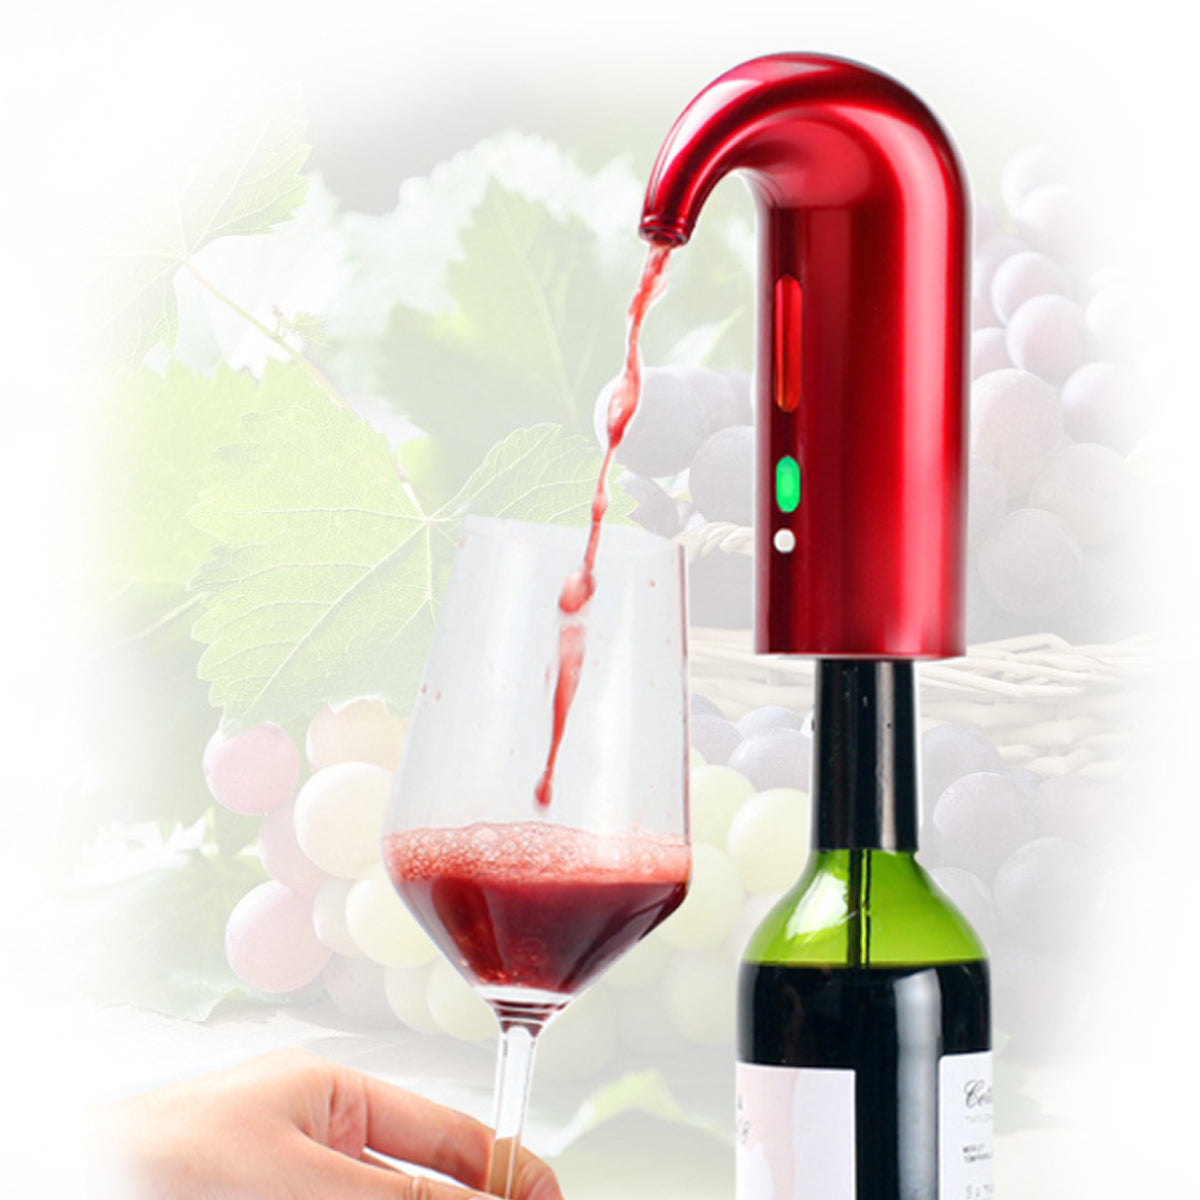 Wine On Tap Wine Oxygenator For Smoother Taste by VistaShops